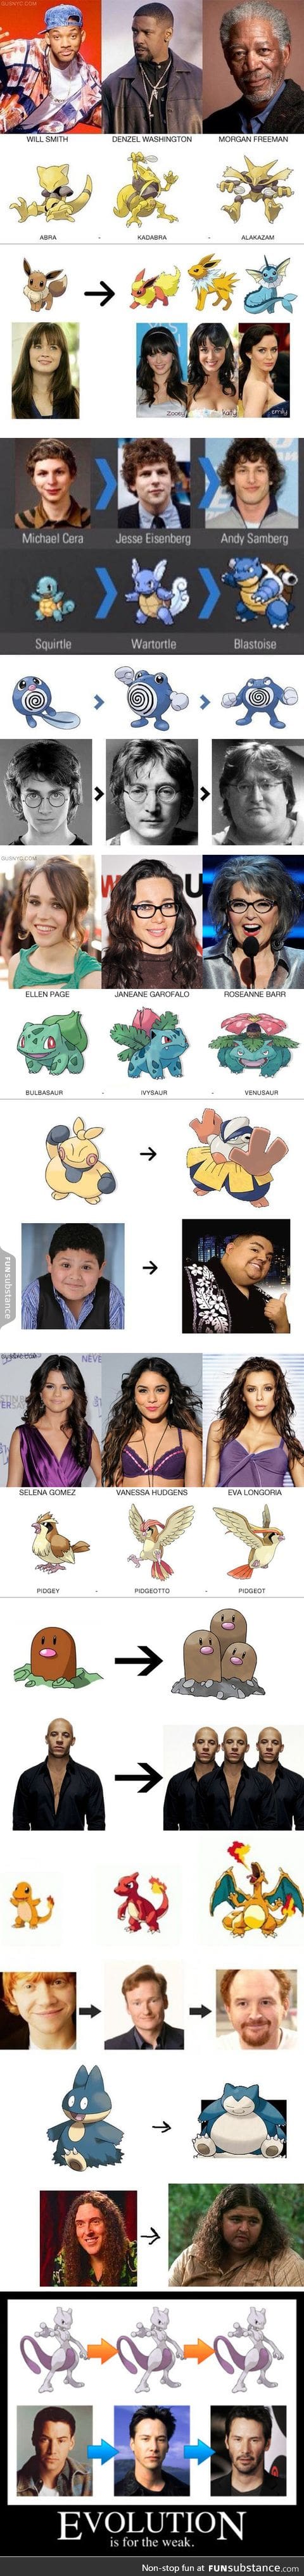 Celebrity evolutions